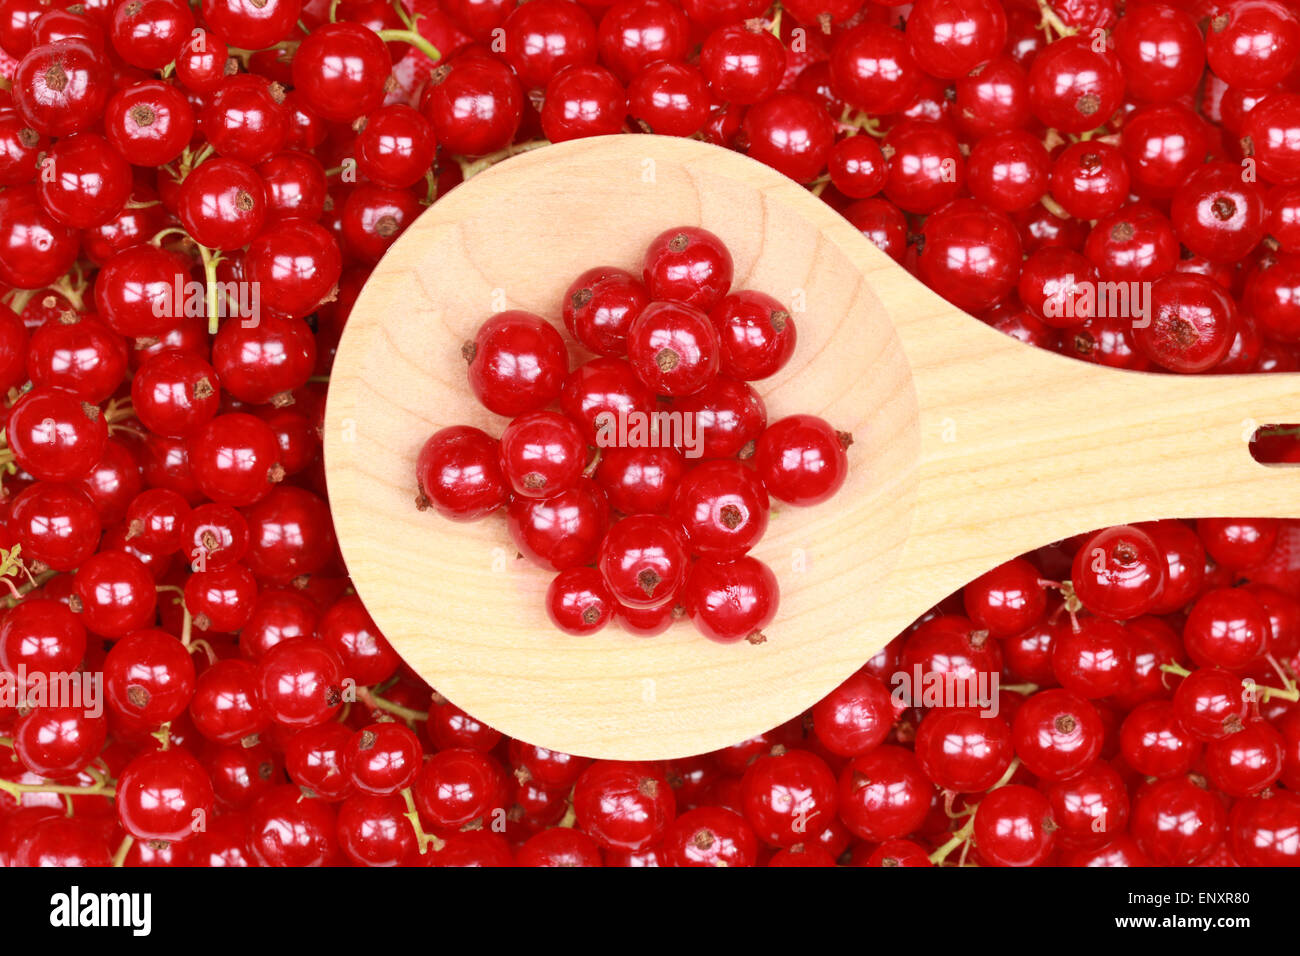 Frisch gepflückte rote Johannisbeeren Foto Stock